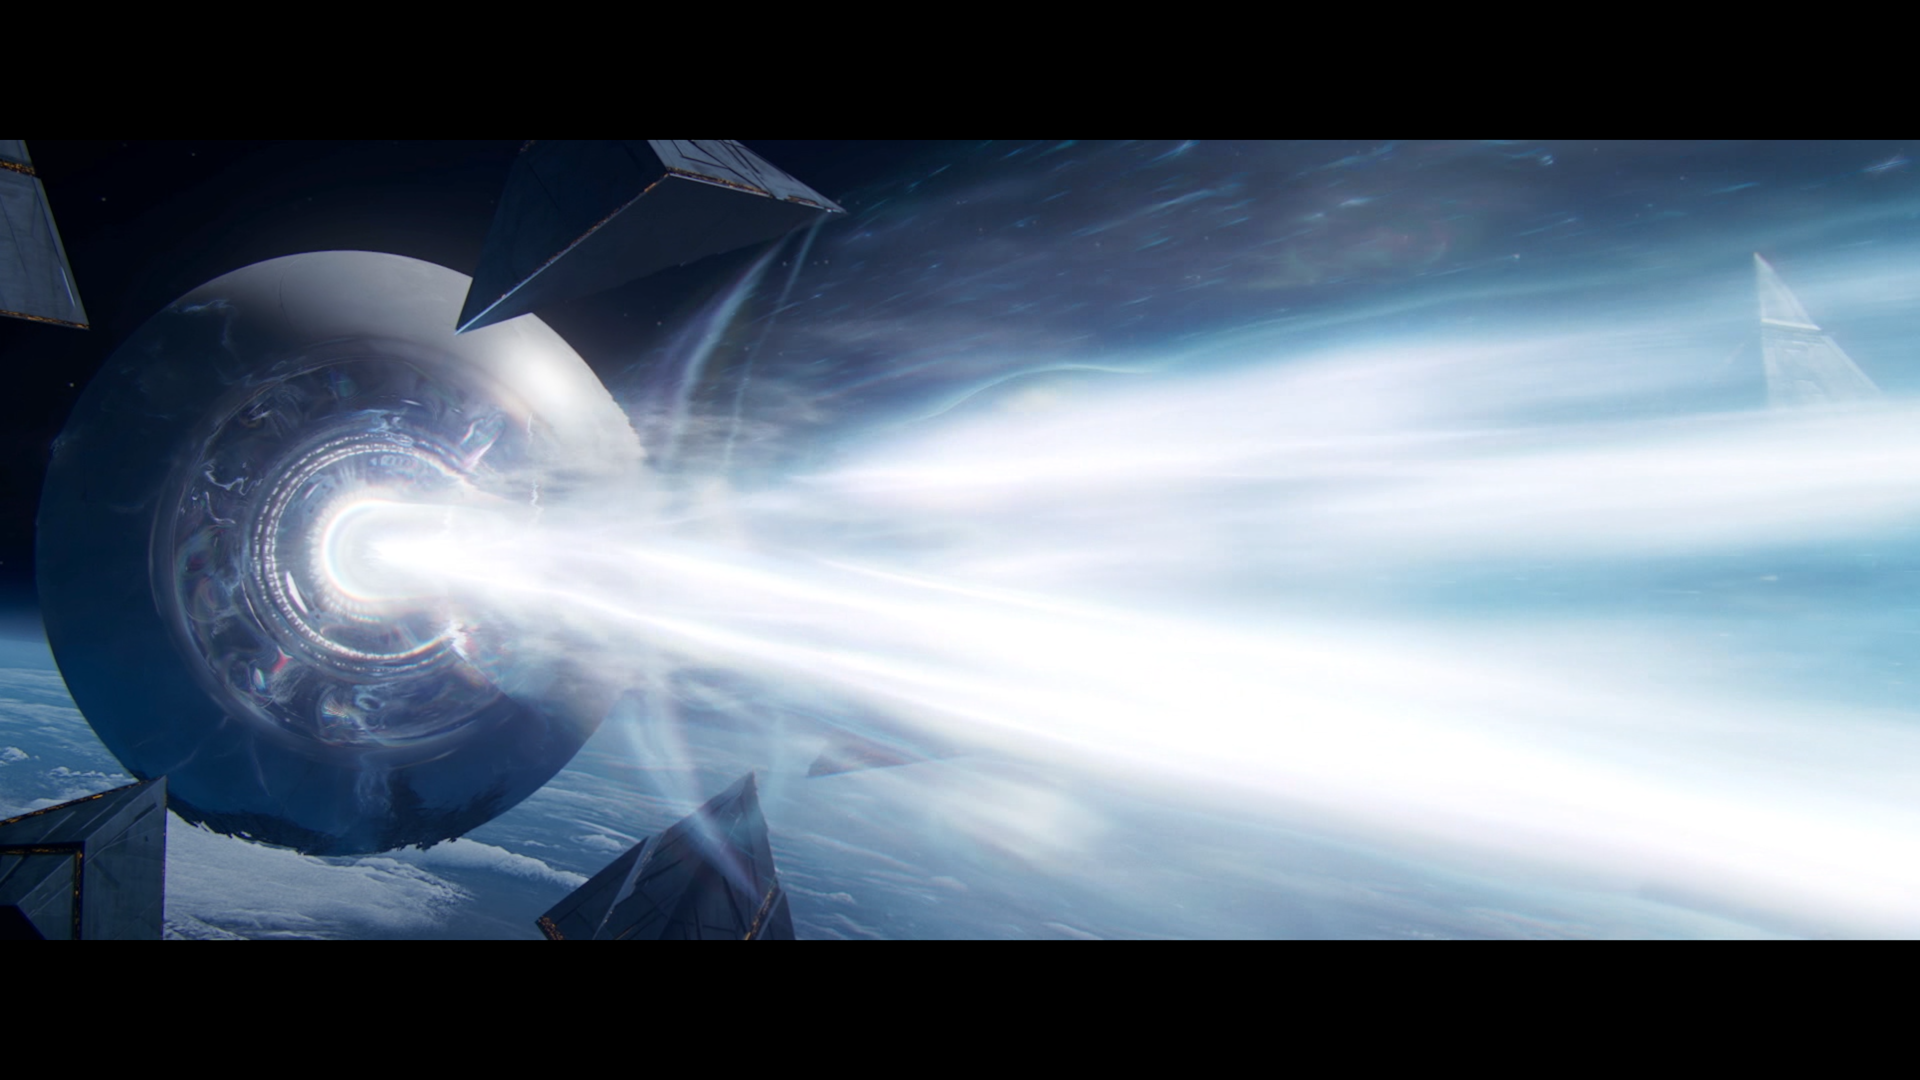 Destiny 2 Lightfall - Escena con el Viajero disparando un rayo como la Estrella de la Muerte